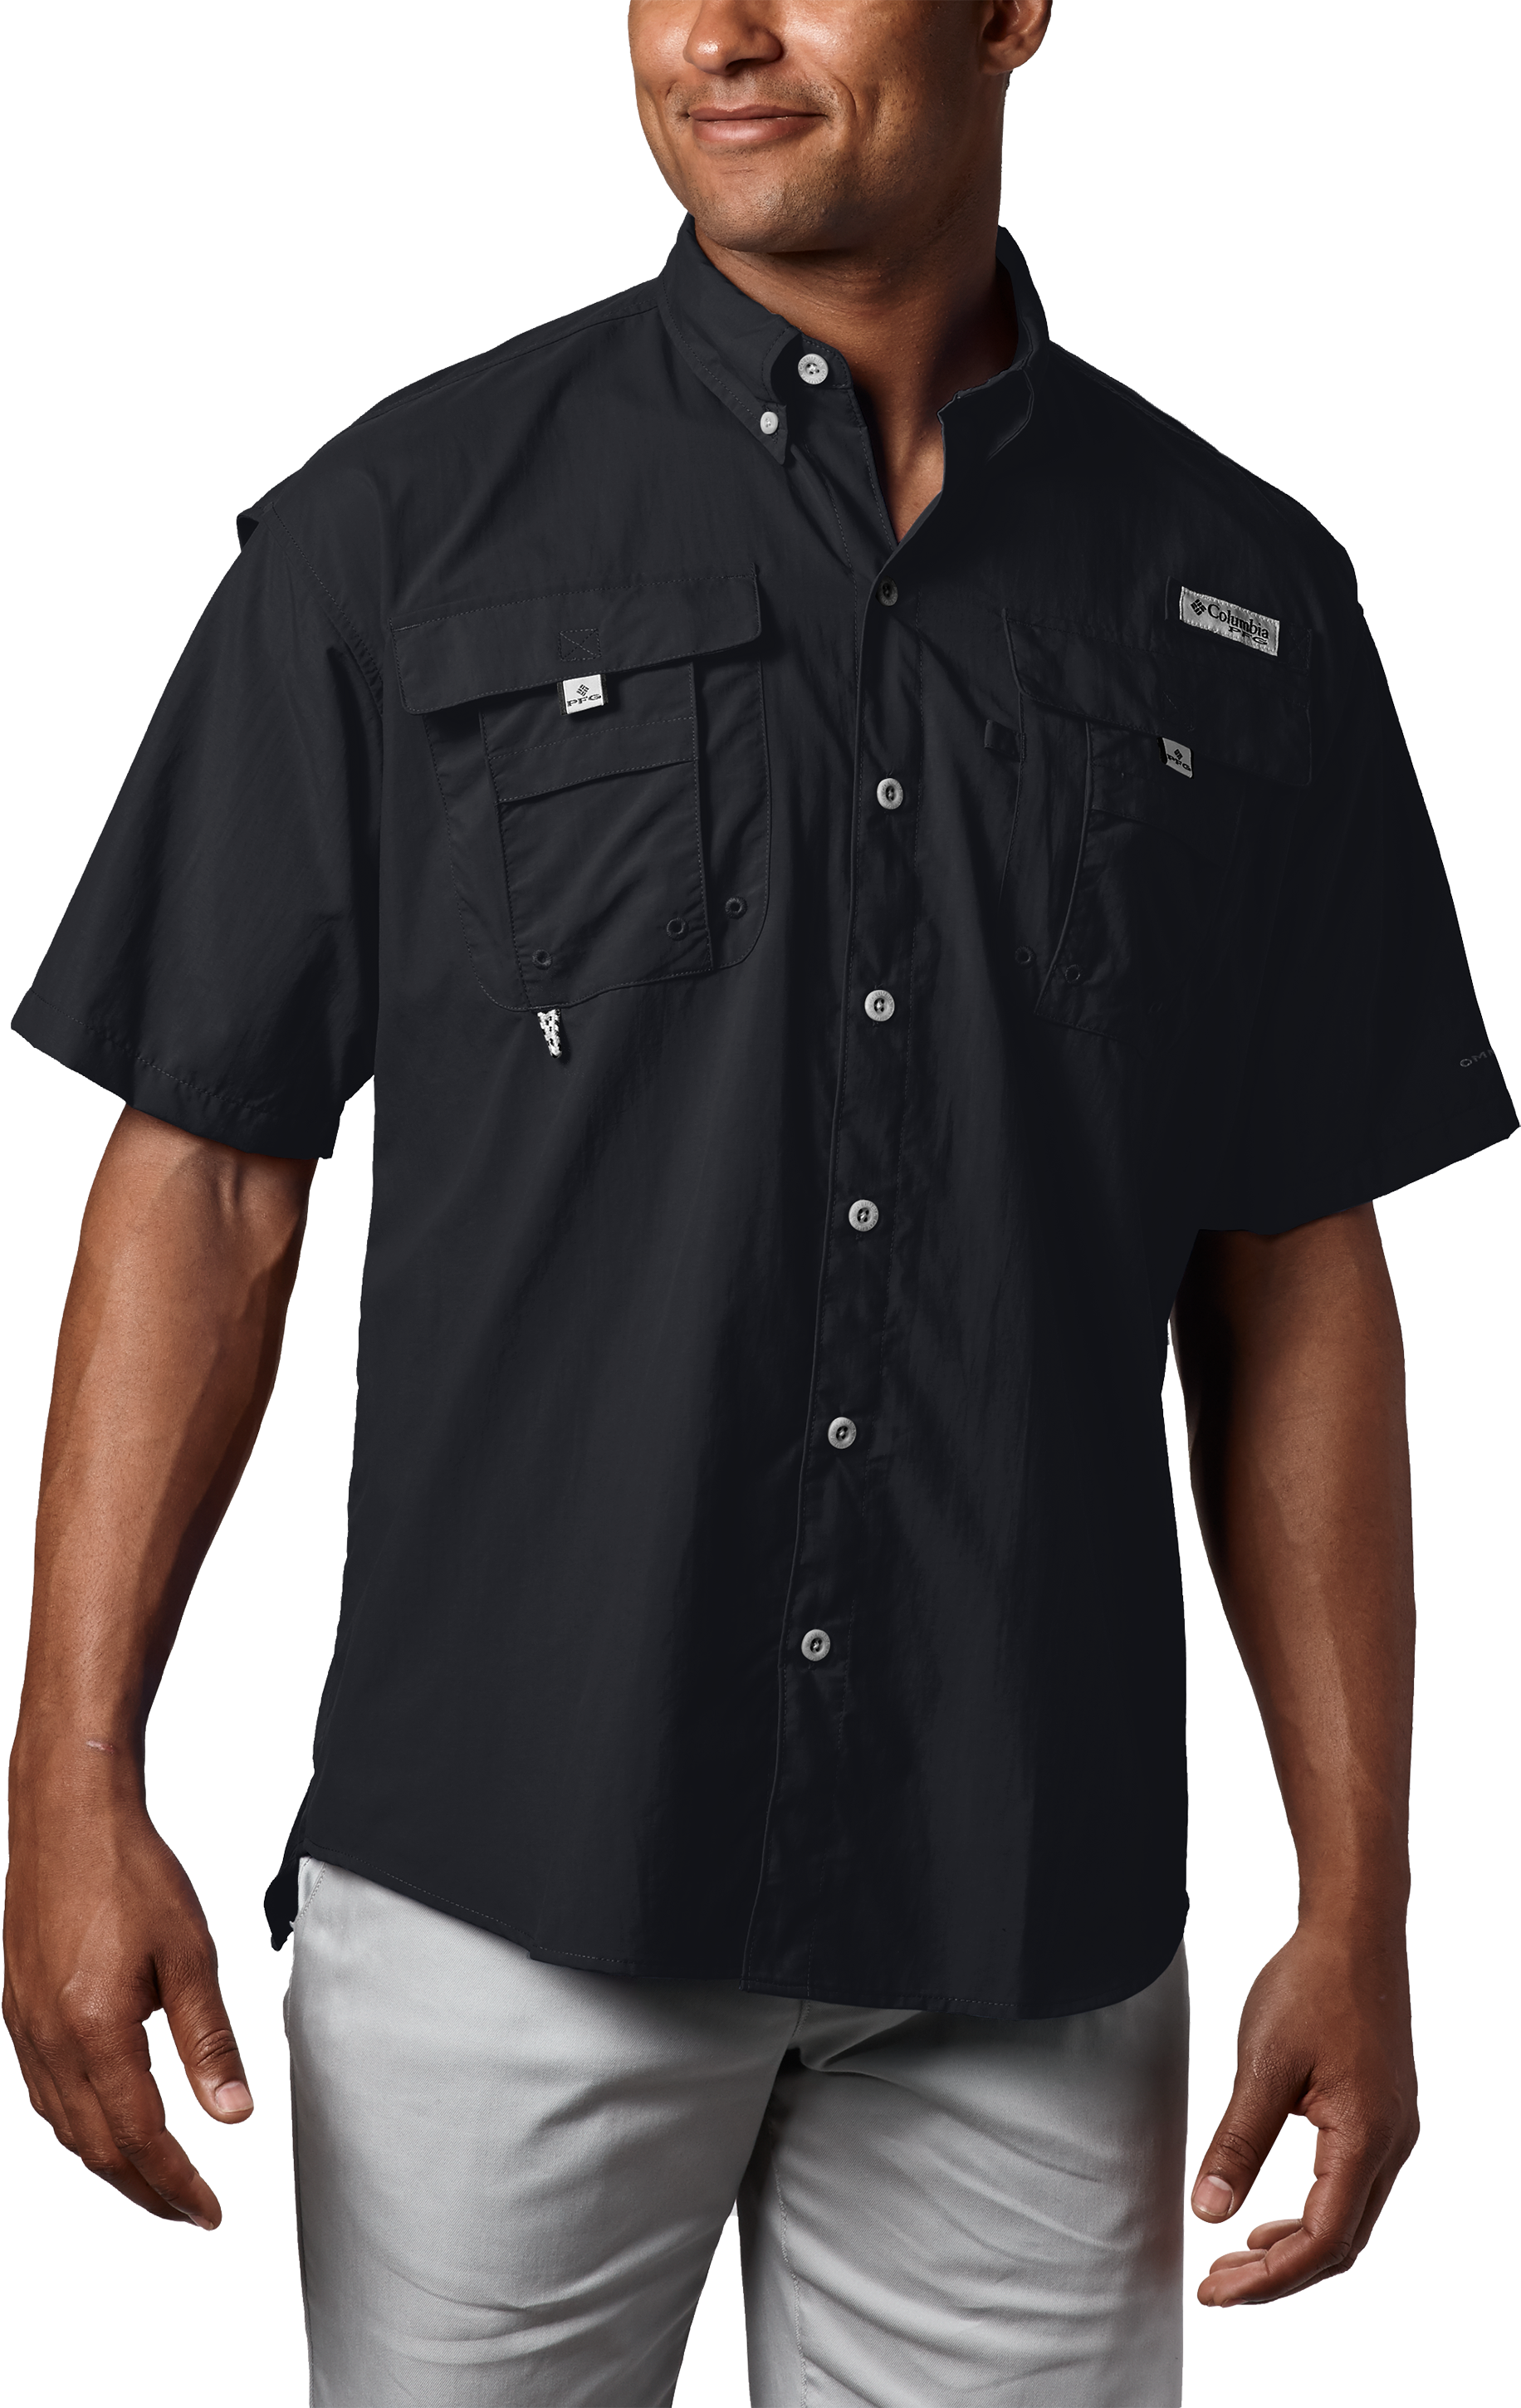 Columbia Bahama II Shirt with Omni-Shade for Men